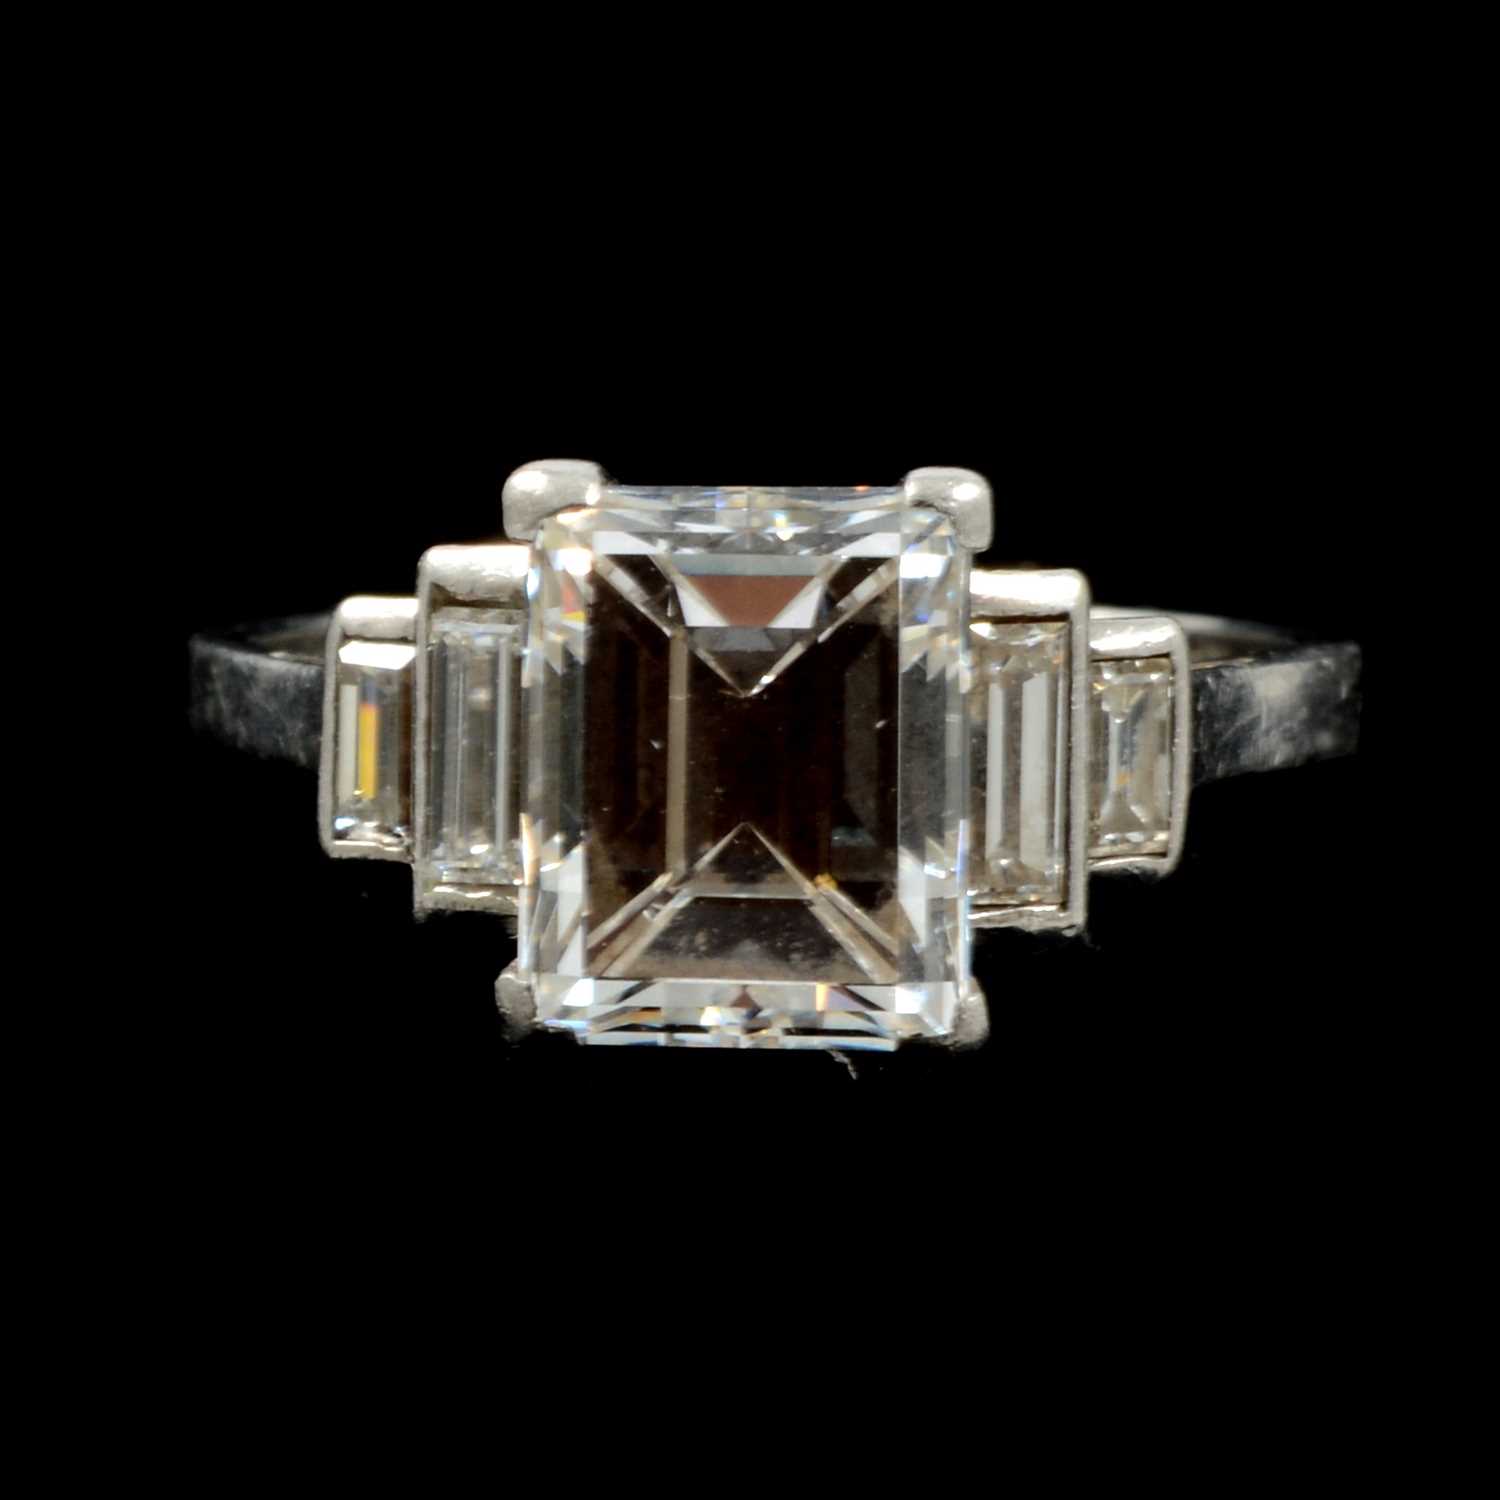 Lot 14 - A diamond solitaire ring, rectangular step cut stone, 2.38 carats.